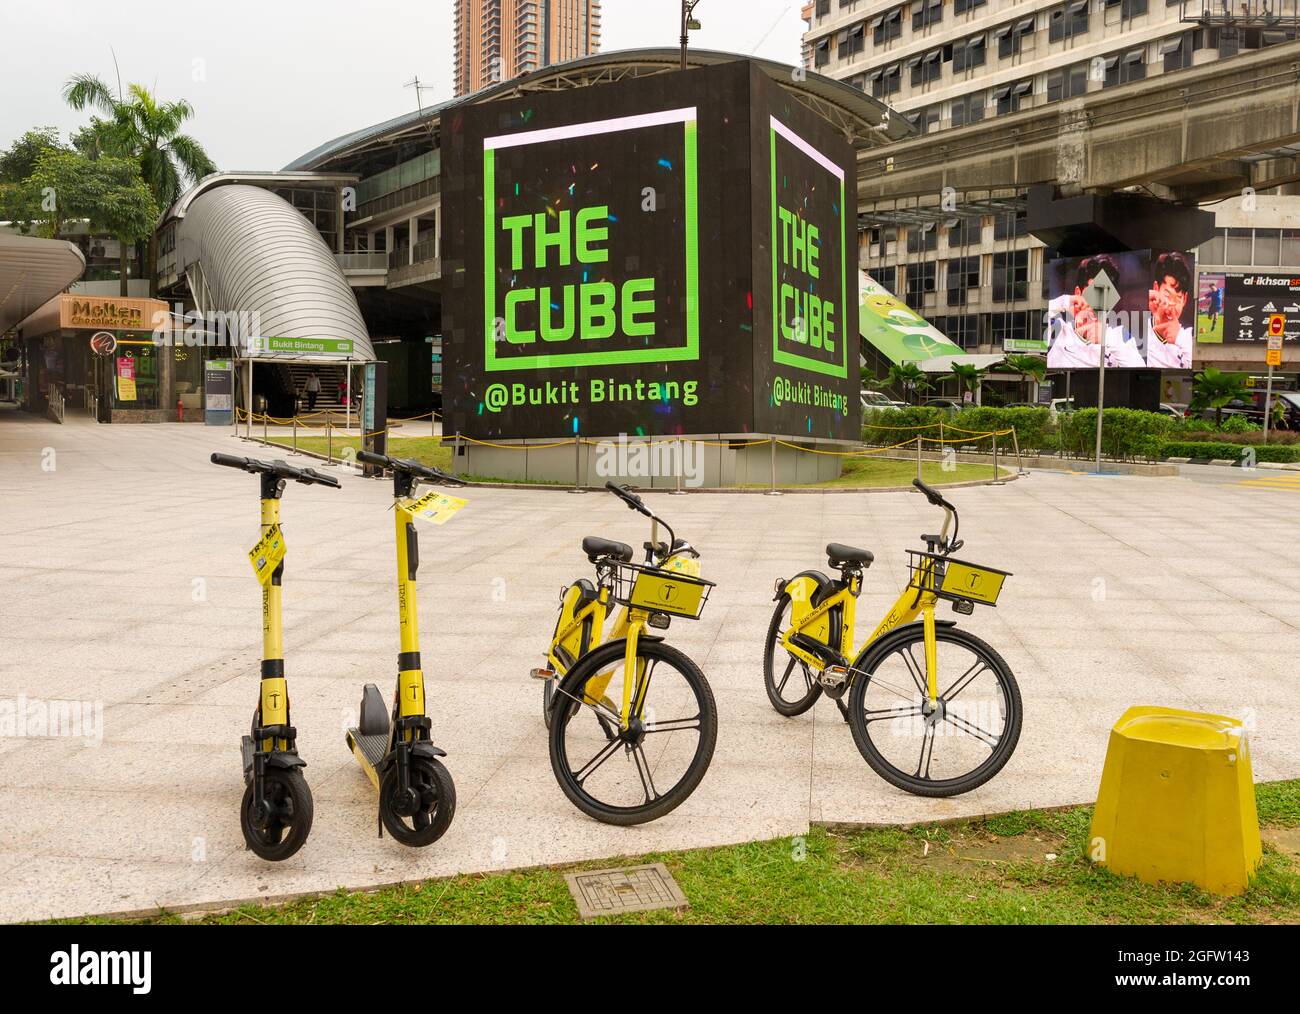 The Cube, Bukit Bintang, Kuala Lumpur Stockfoto